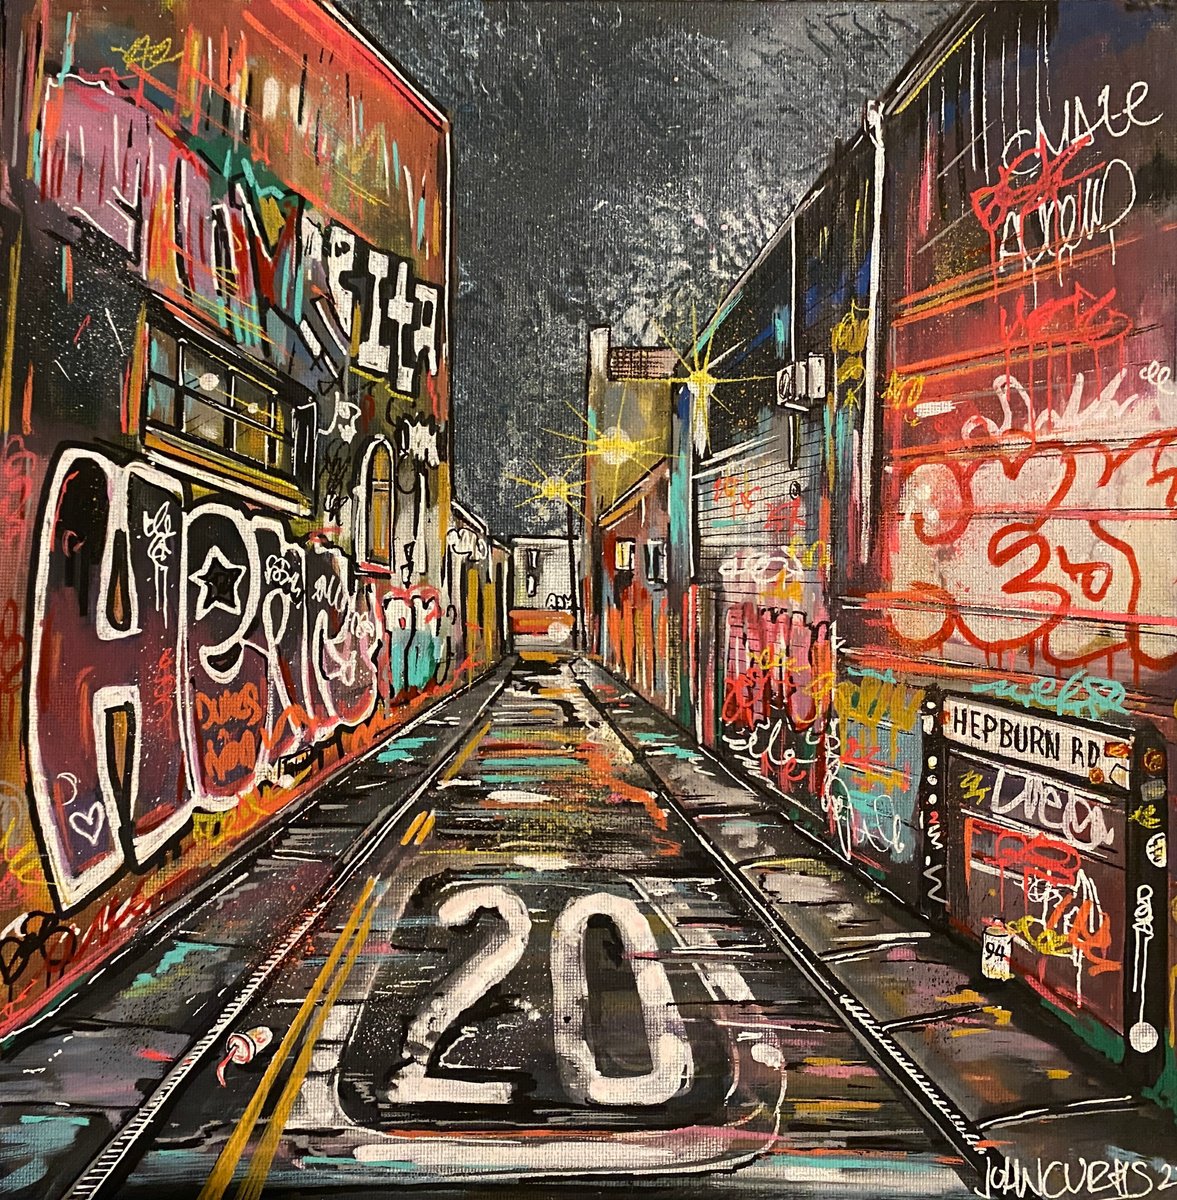 Hepburn Road - Original on canvas board by John Curtis